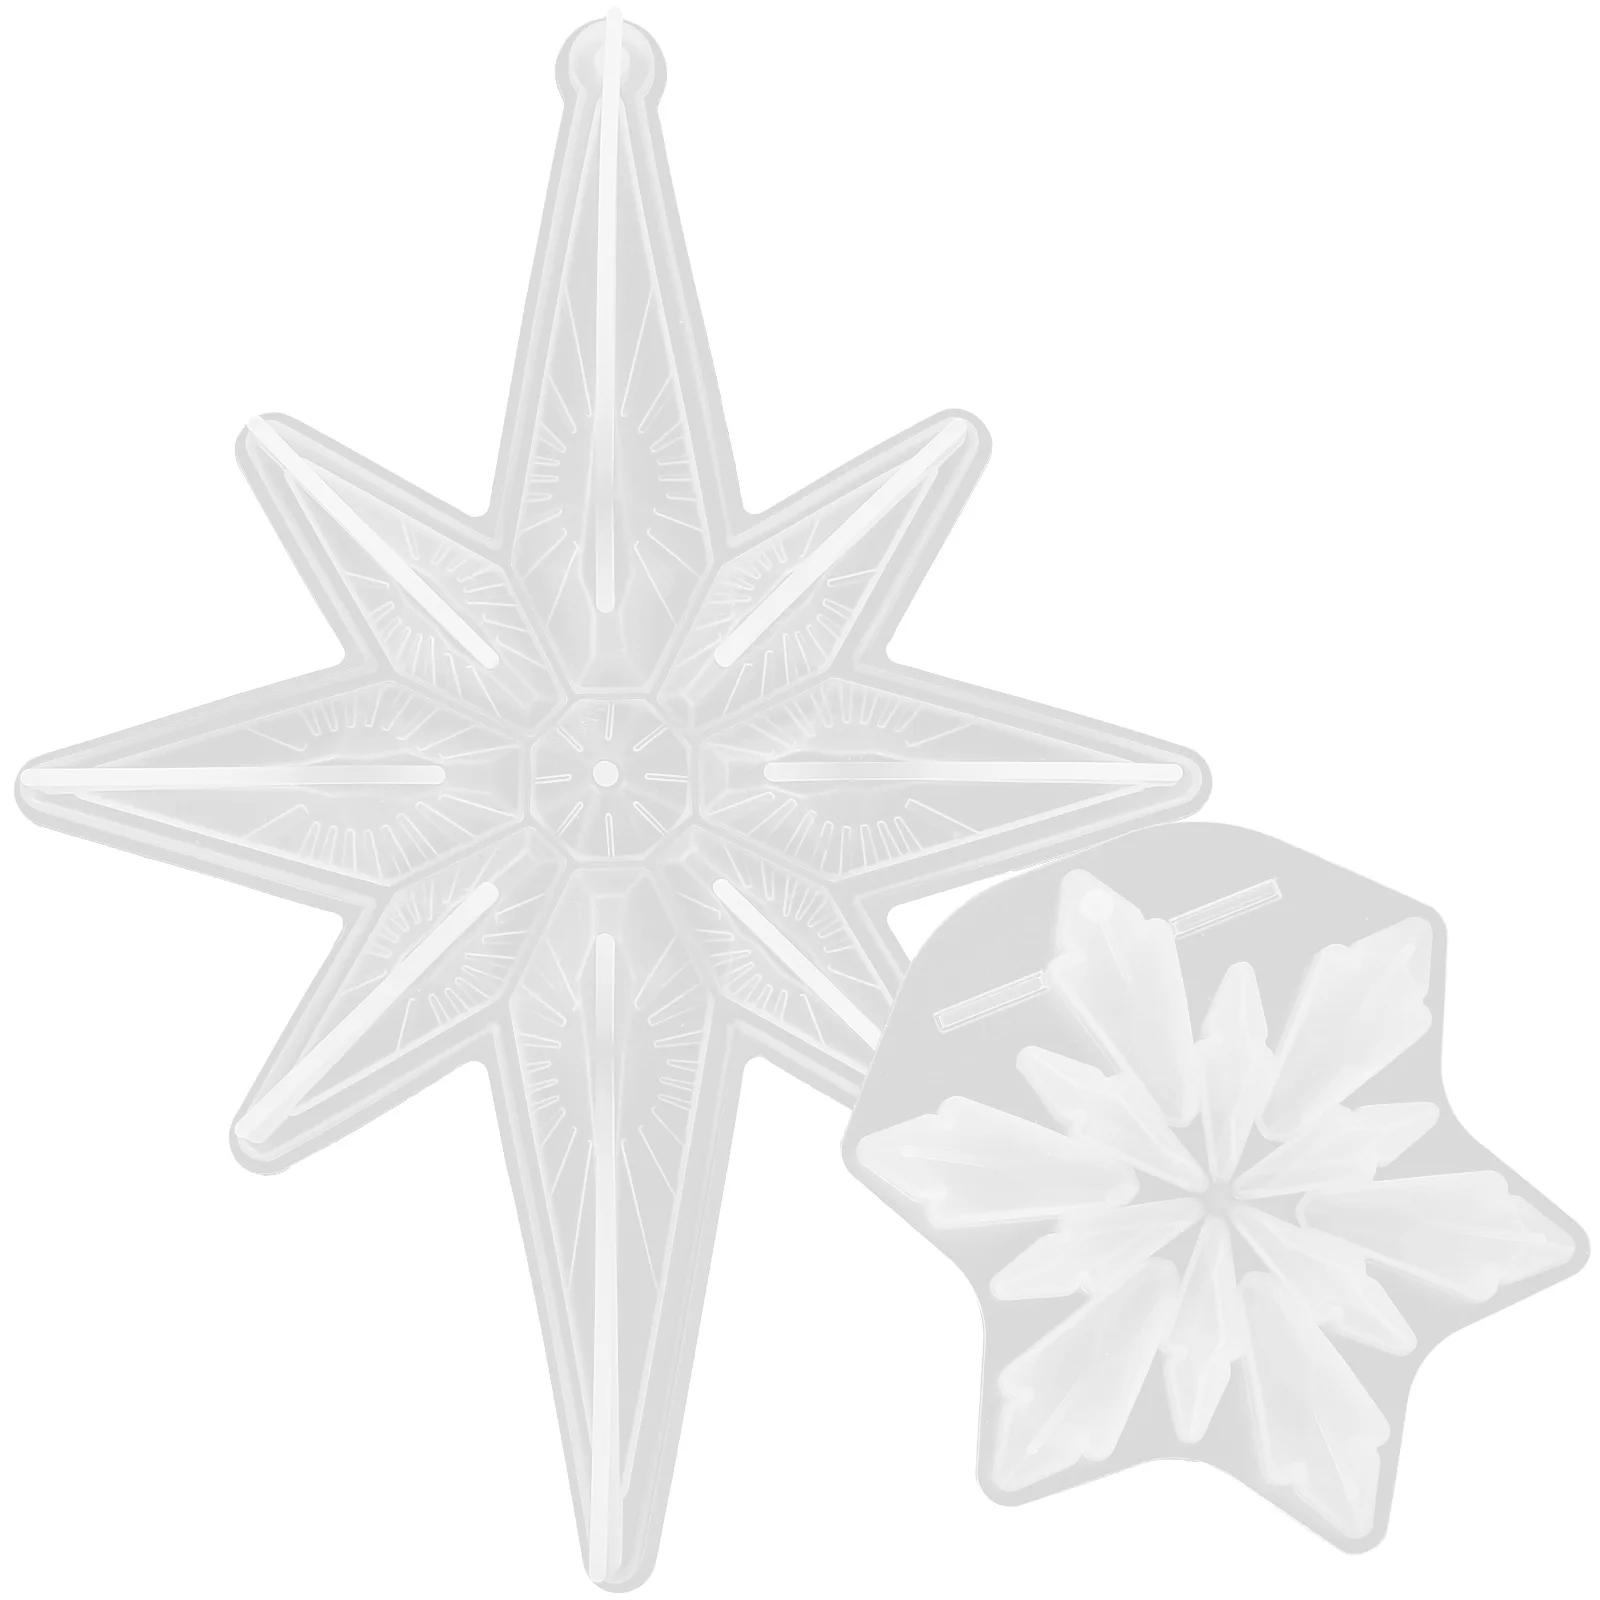 

2 Pcs Xmas Casting Resin Molds 5 Dollars Ornament Crafts DIY Accessory Christmas Silicone Nativity Snowflake Pendant